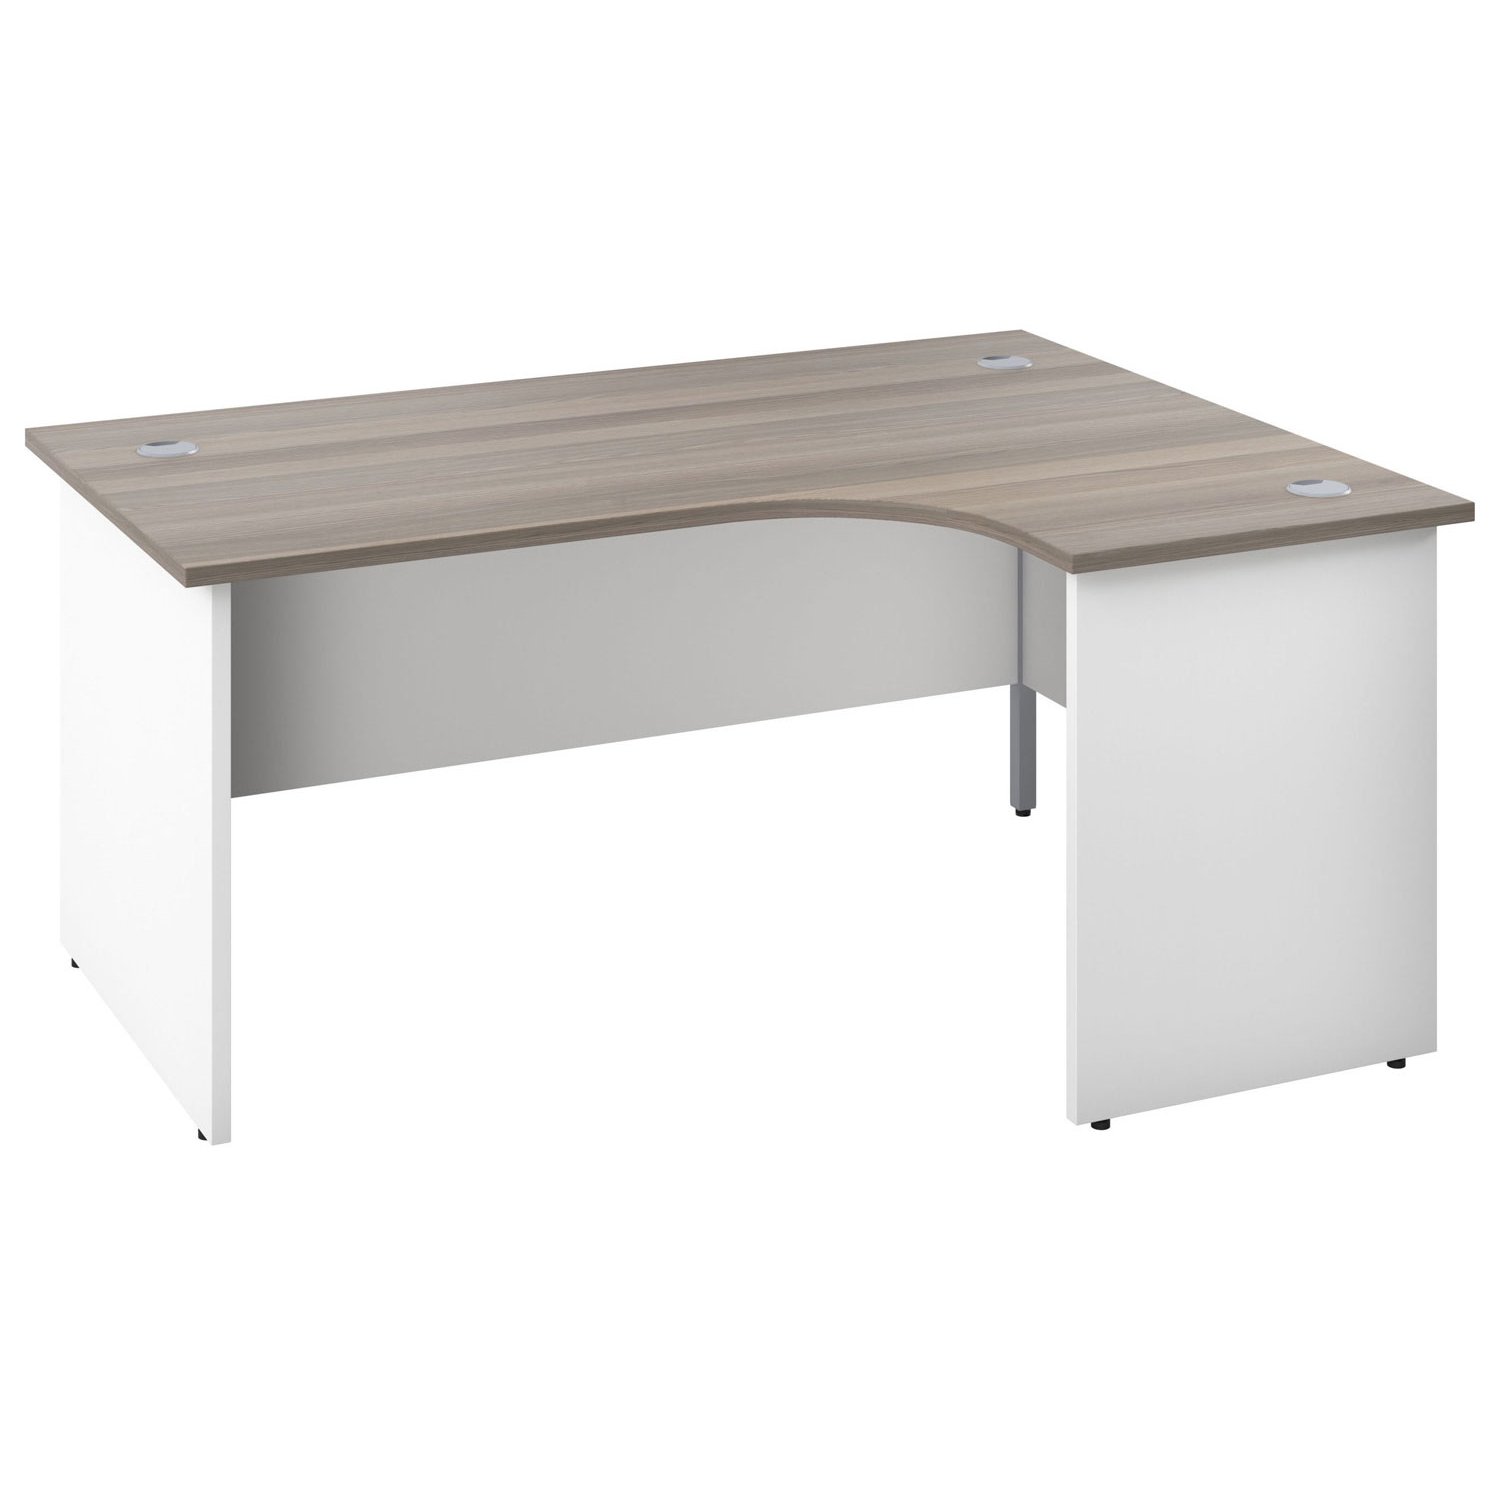 Progress Duo Right Hand Ergonomic Desk, 180wx120/80dx73h (cm), Grey Oak